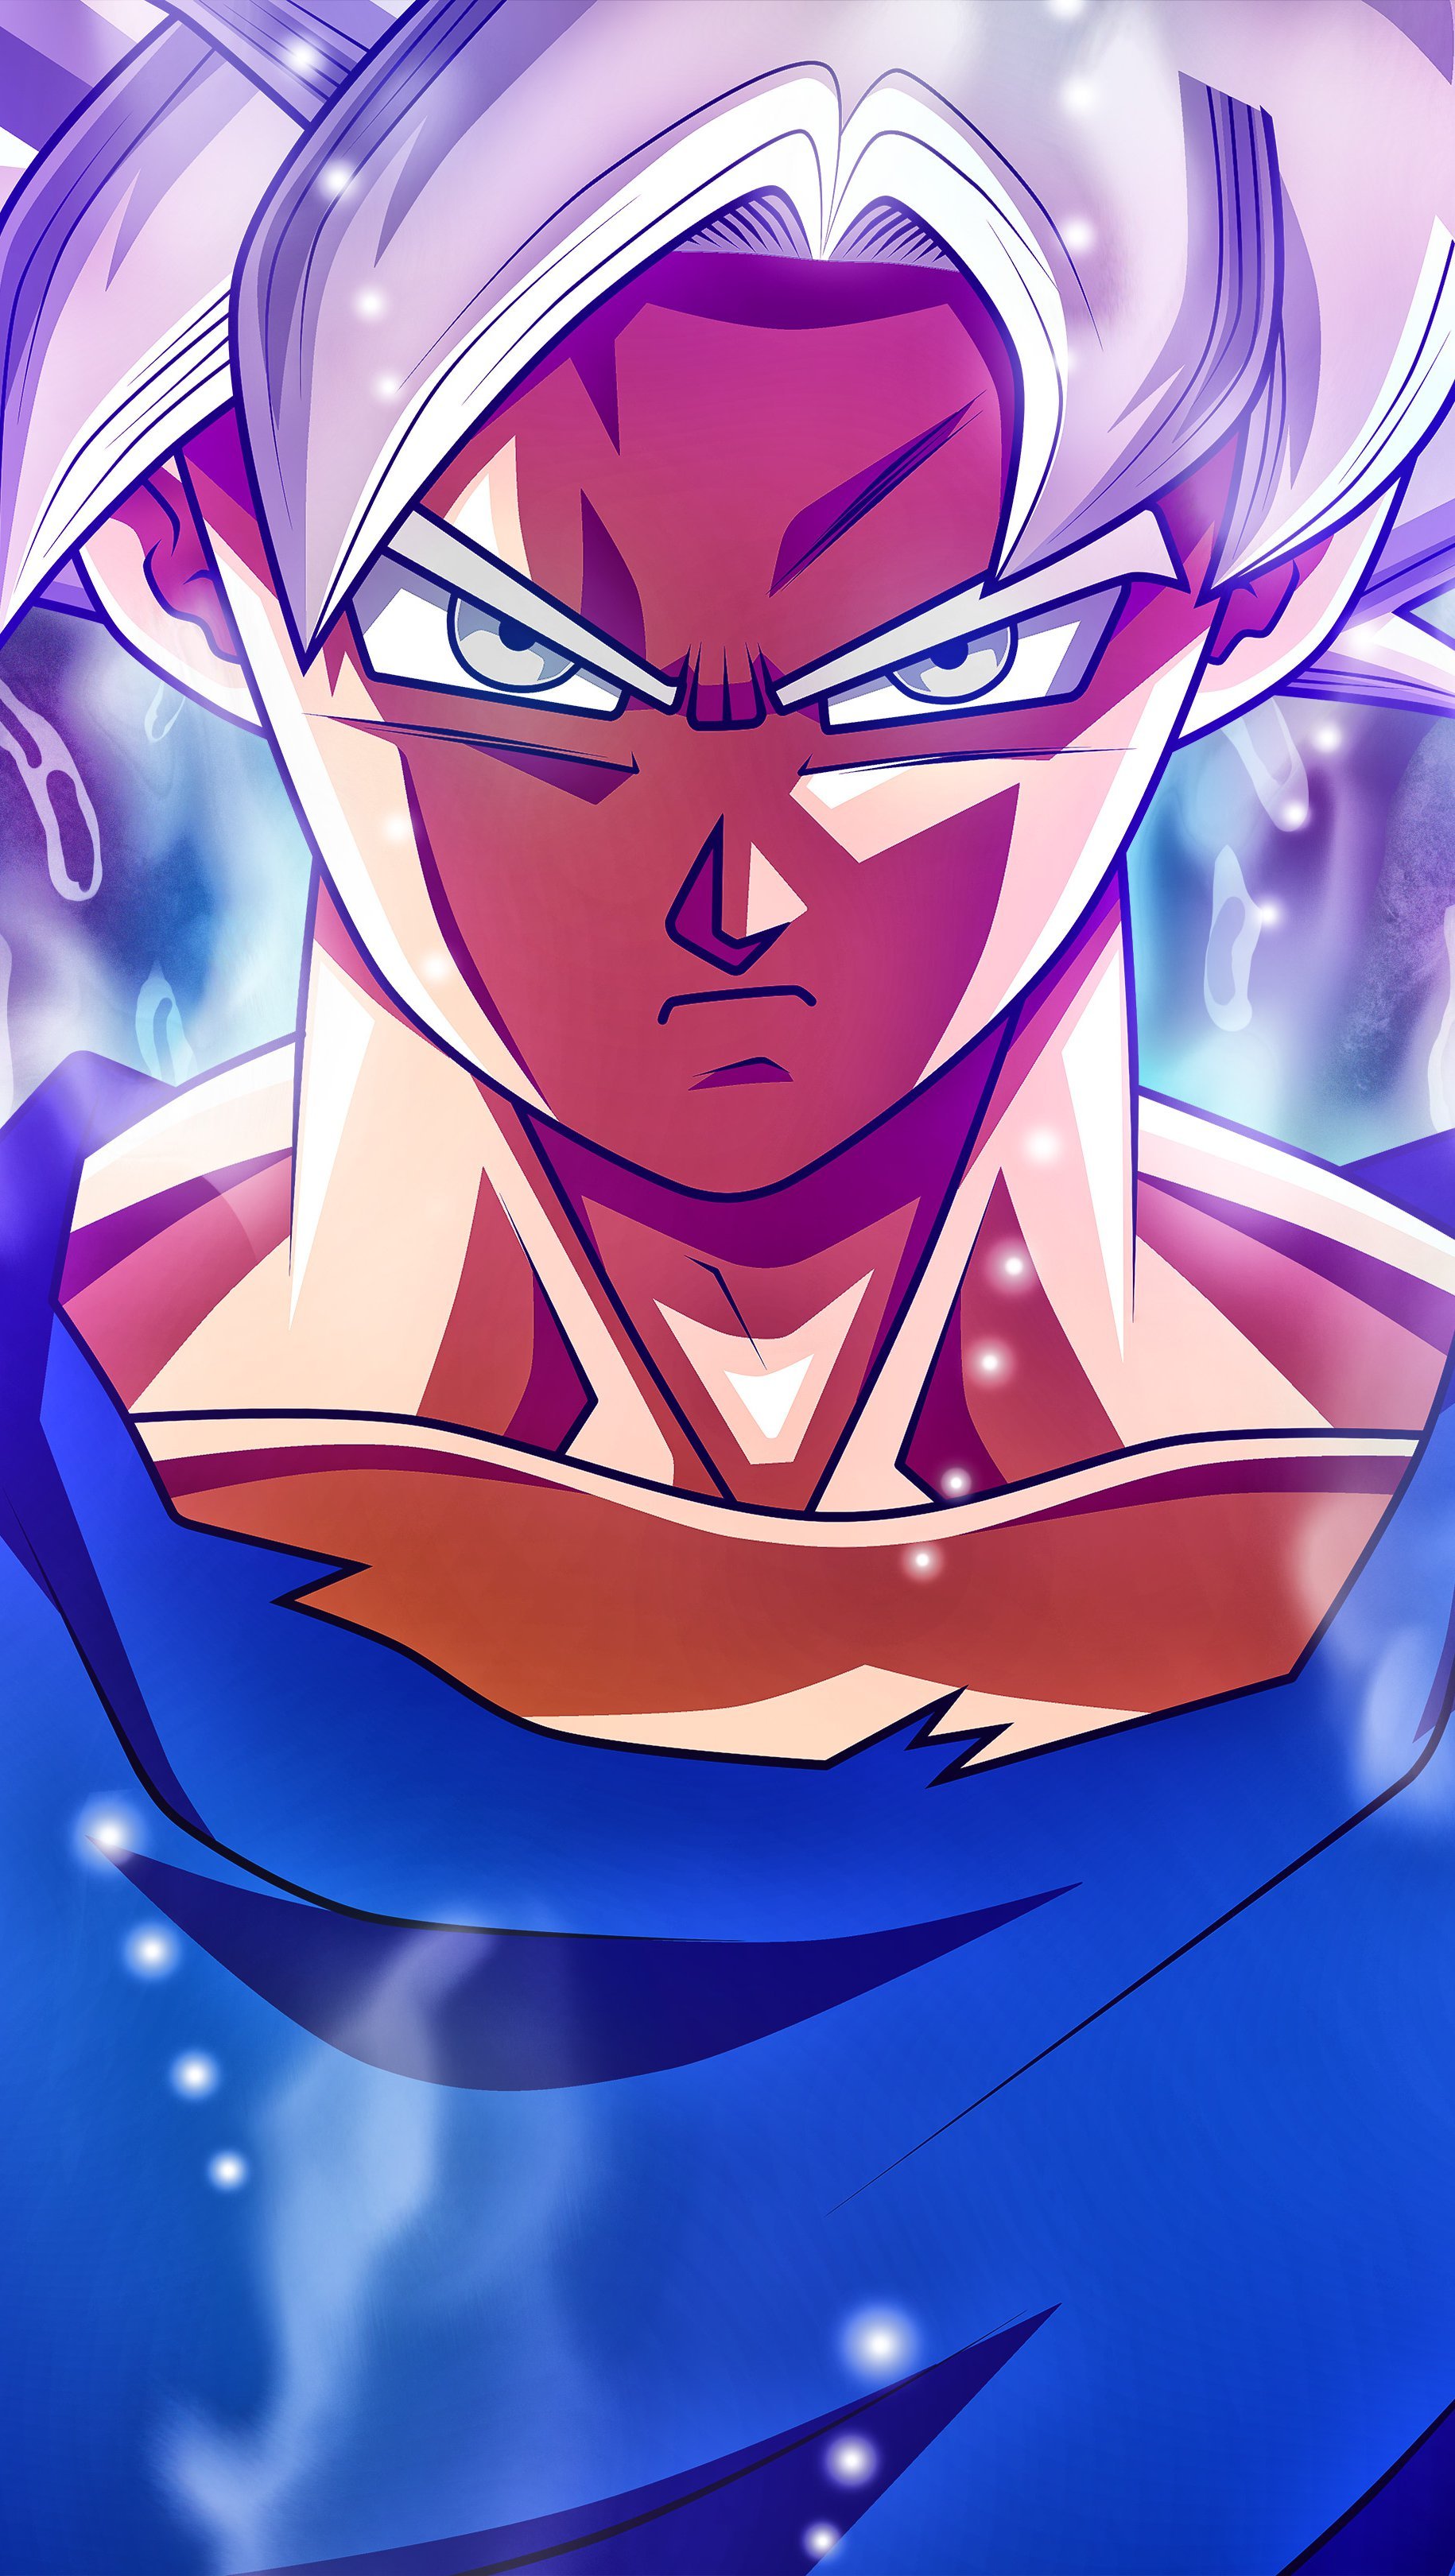 Anime Ultra Instinct Goku Wallpaper Download | MobCup